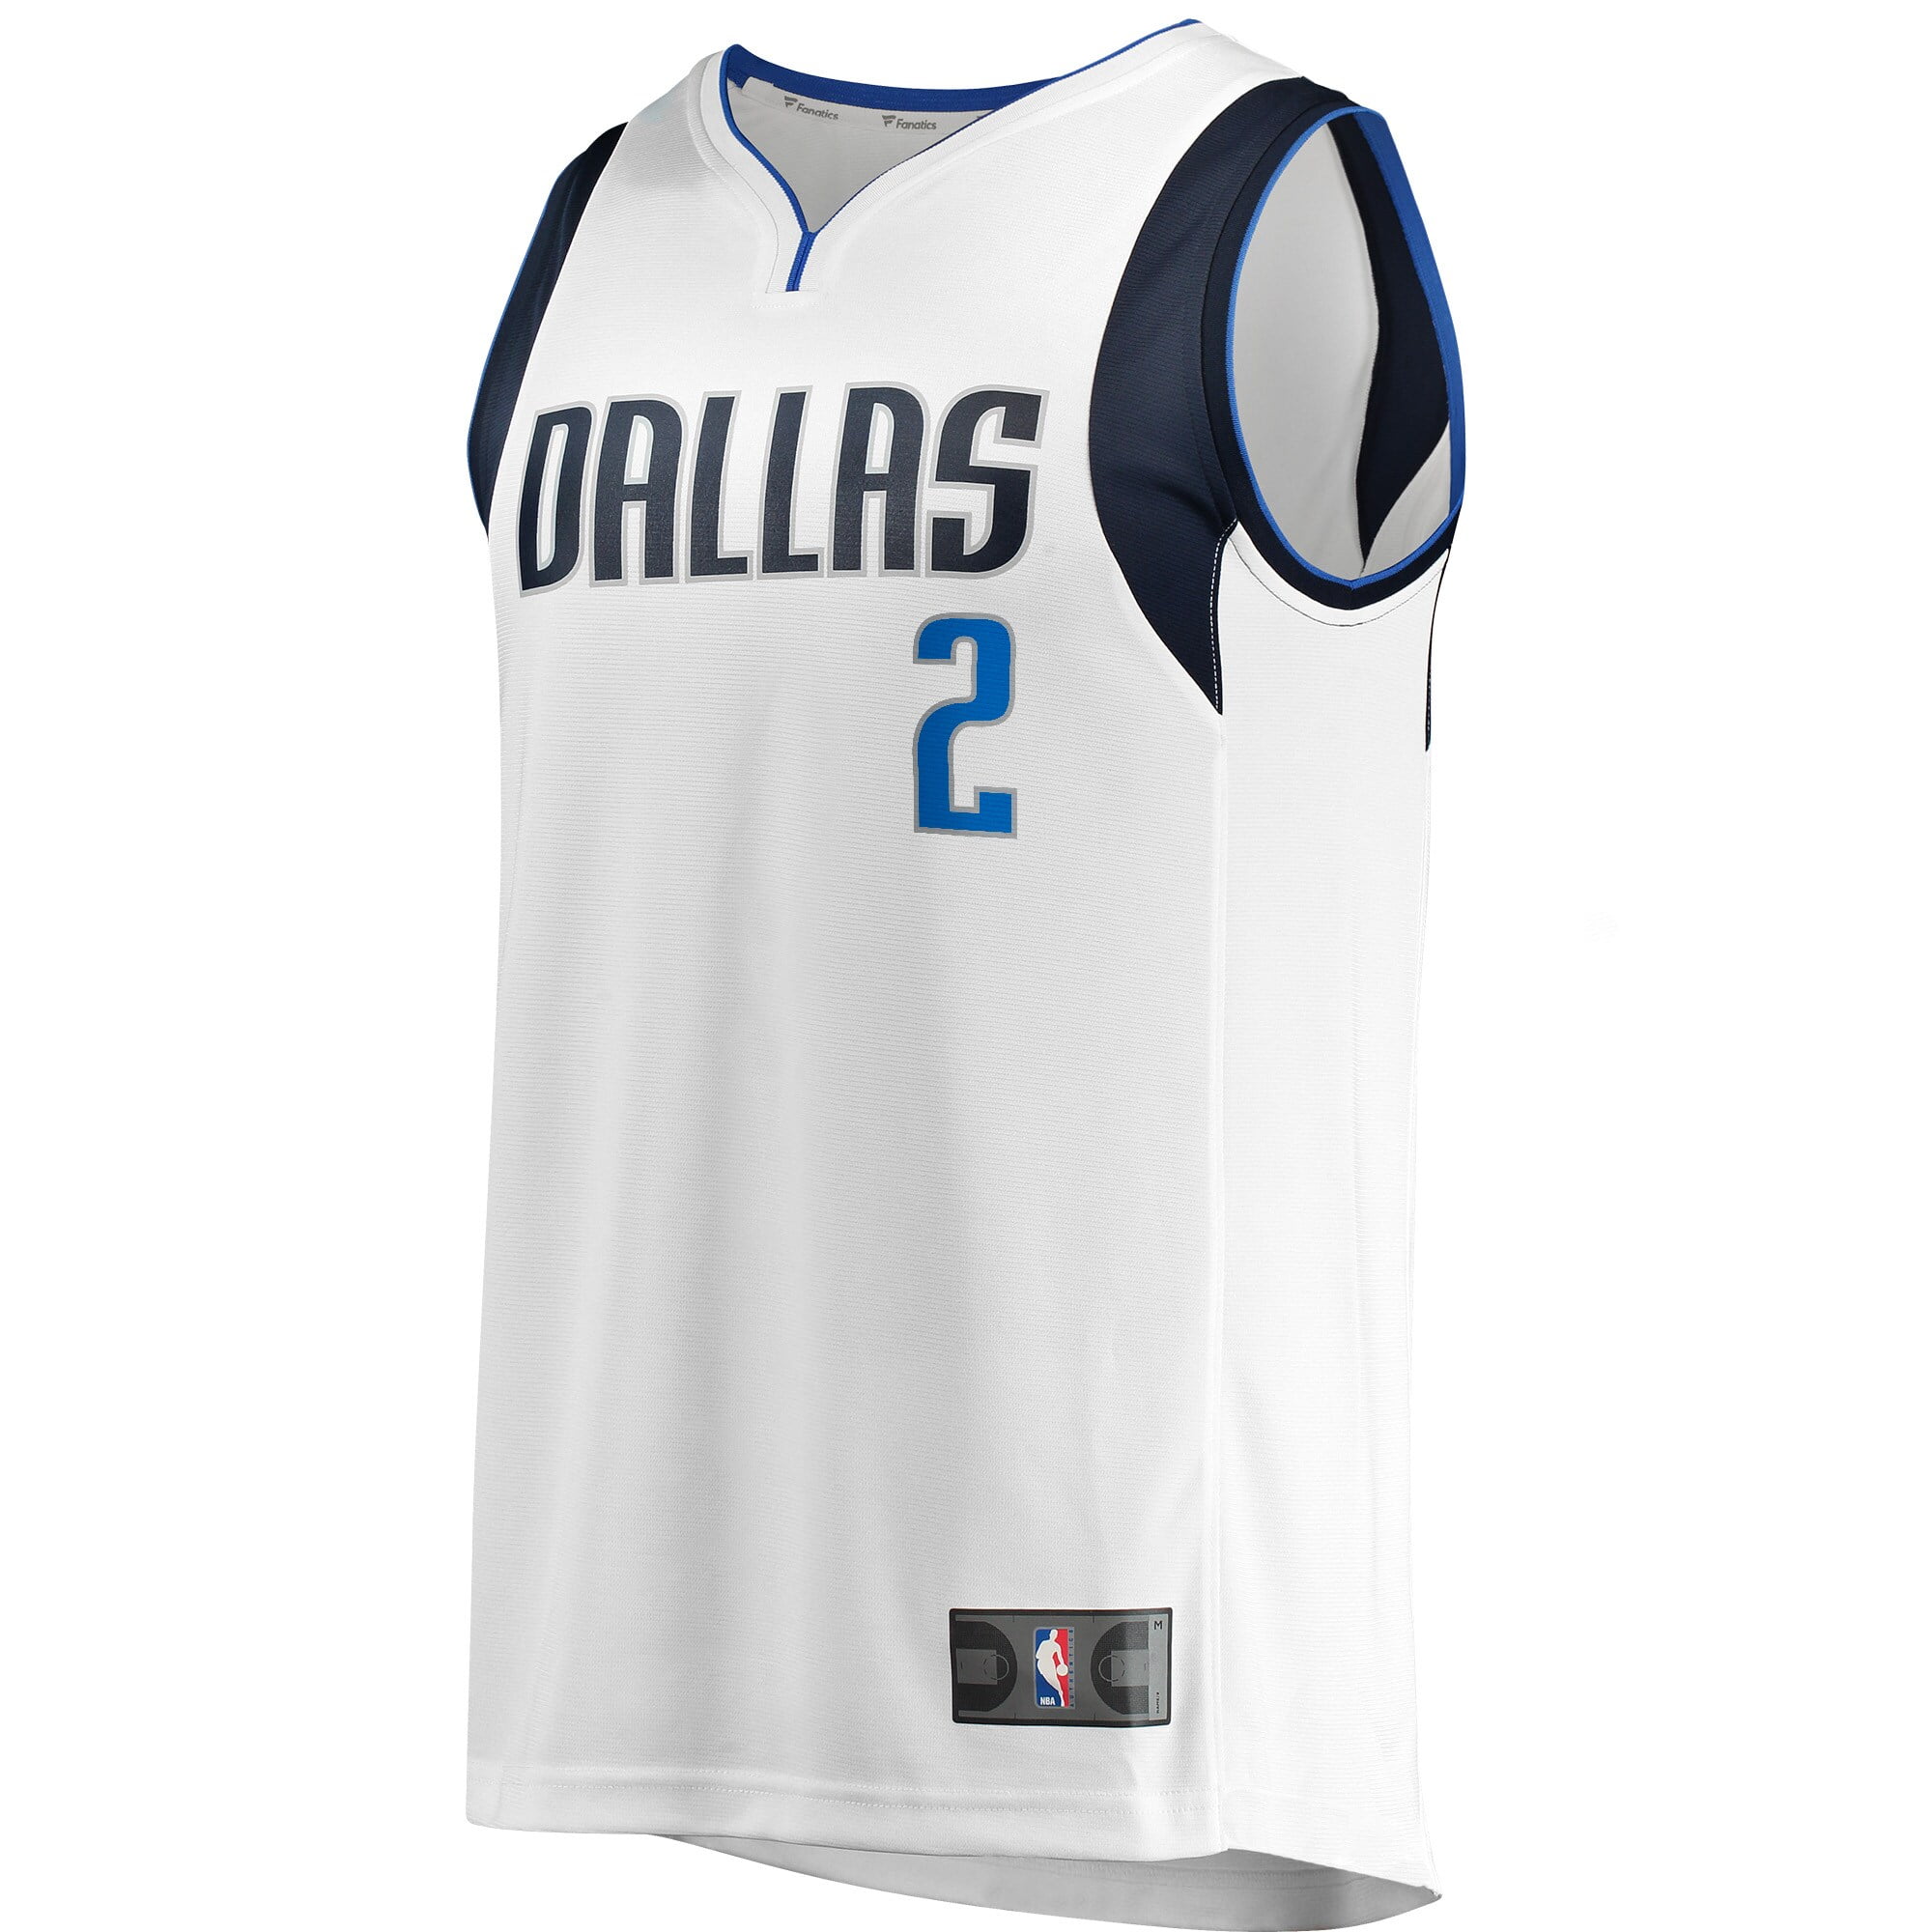 Where to buy Kyrie Irving Dallas Mavericks jersey online 